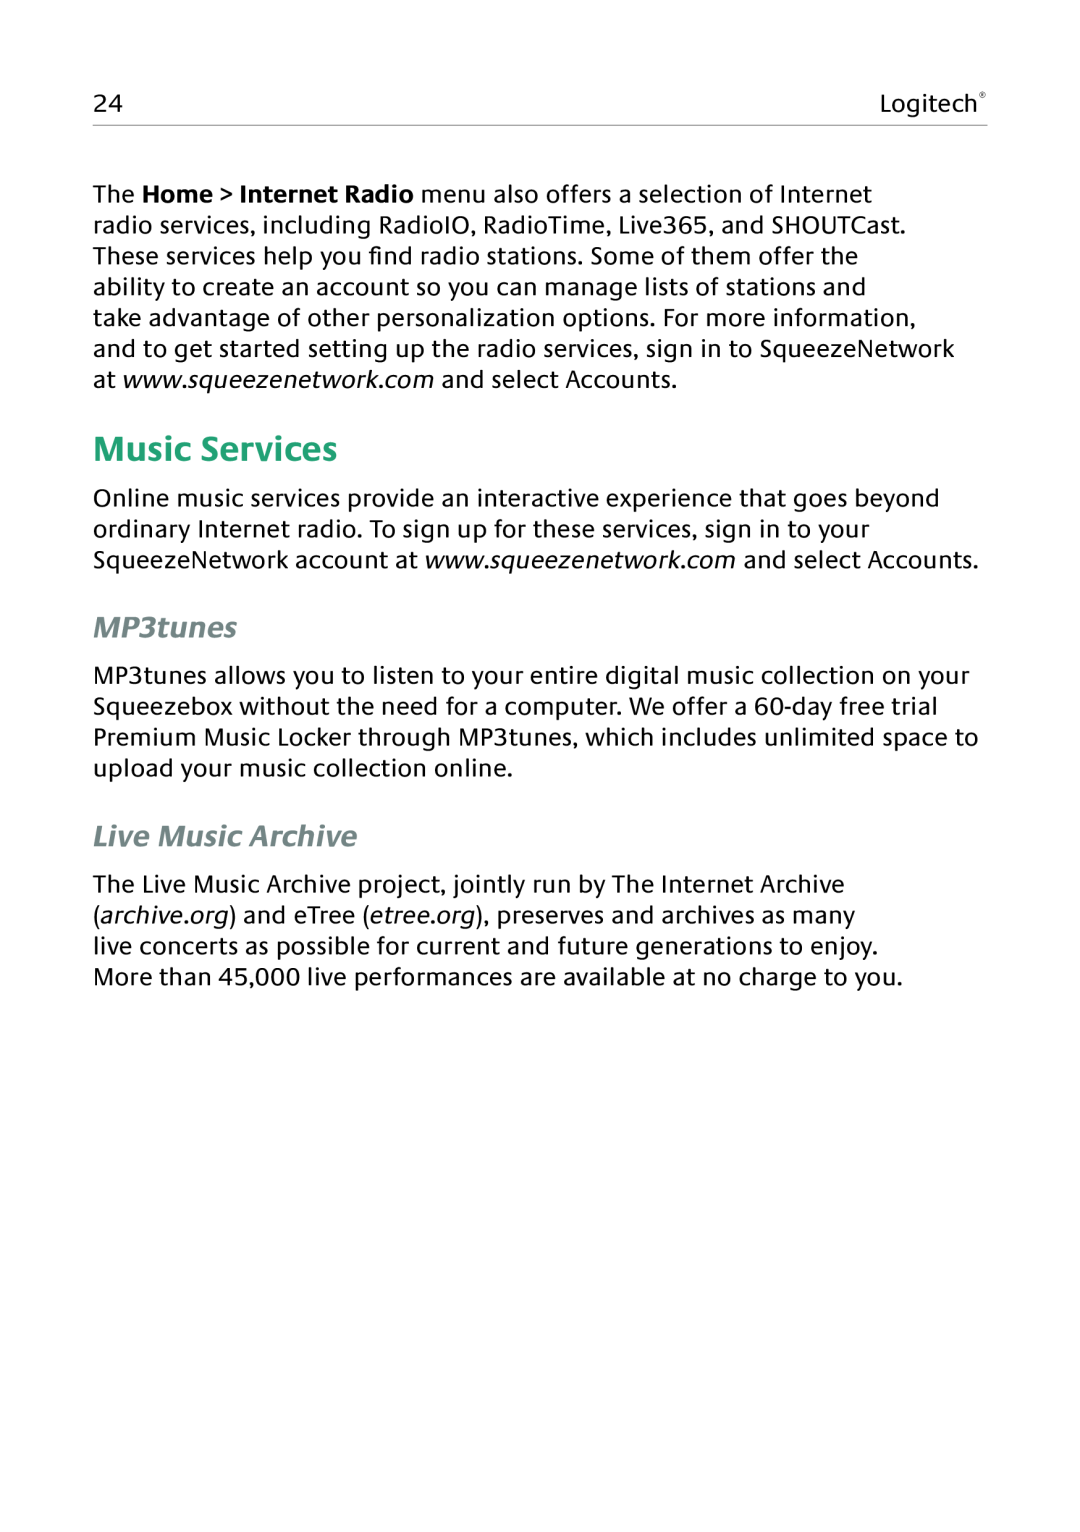 Logitech Duet manual Music Services, MP3tunes, Live Music Archive 